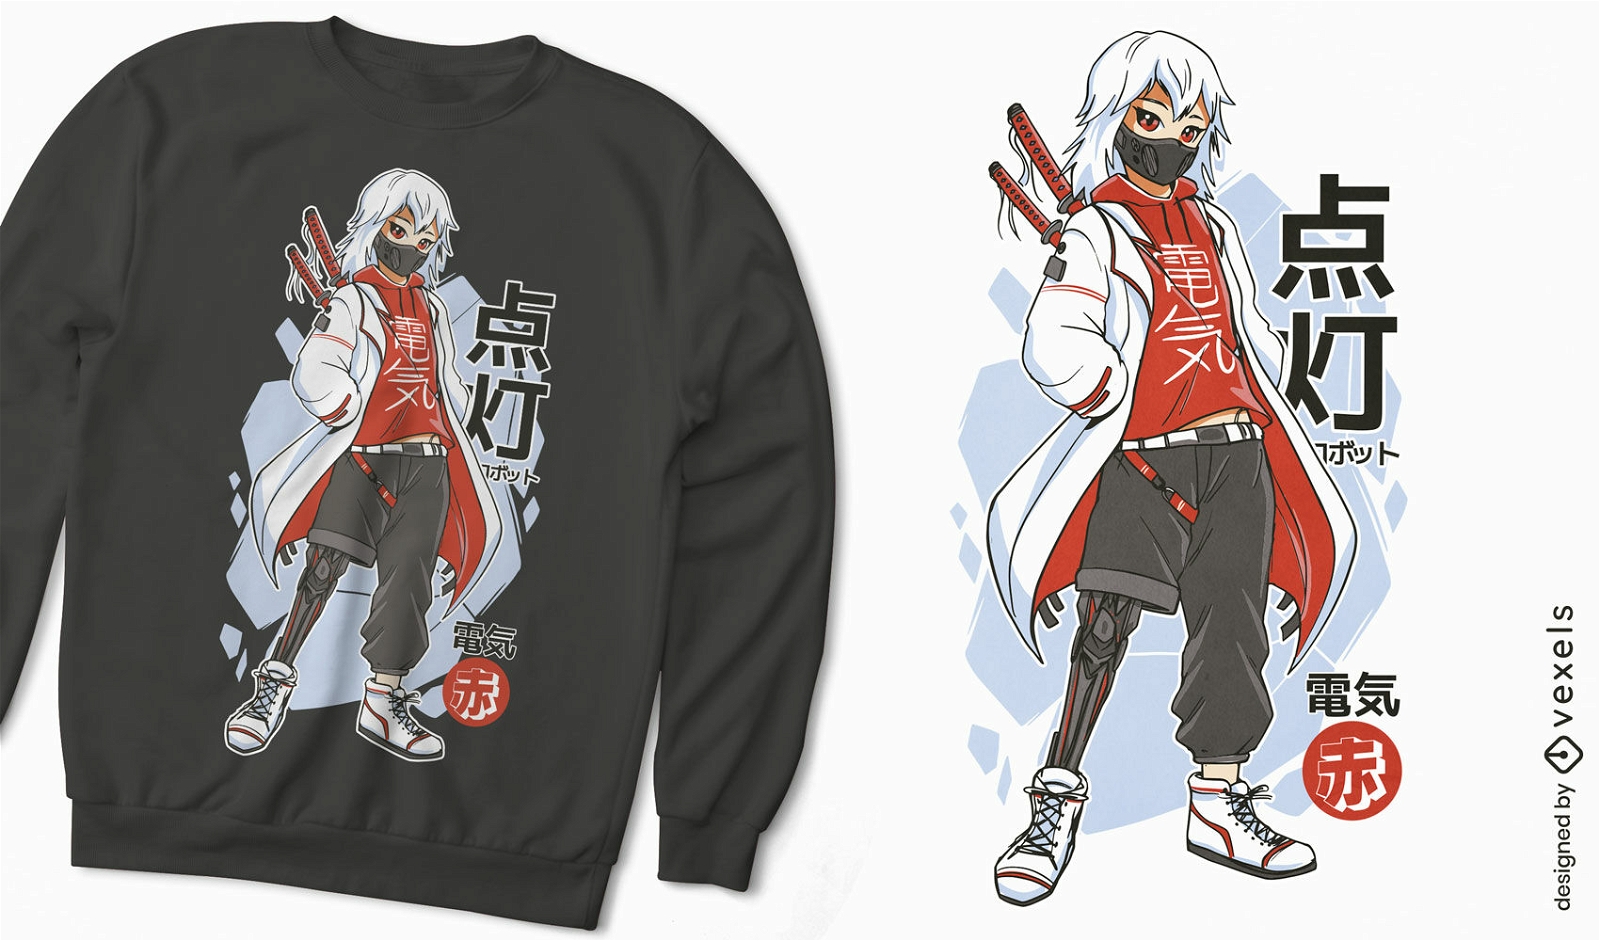 Techware anime character t-shirt design